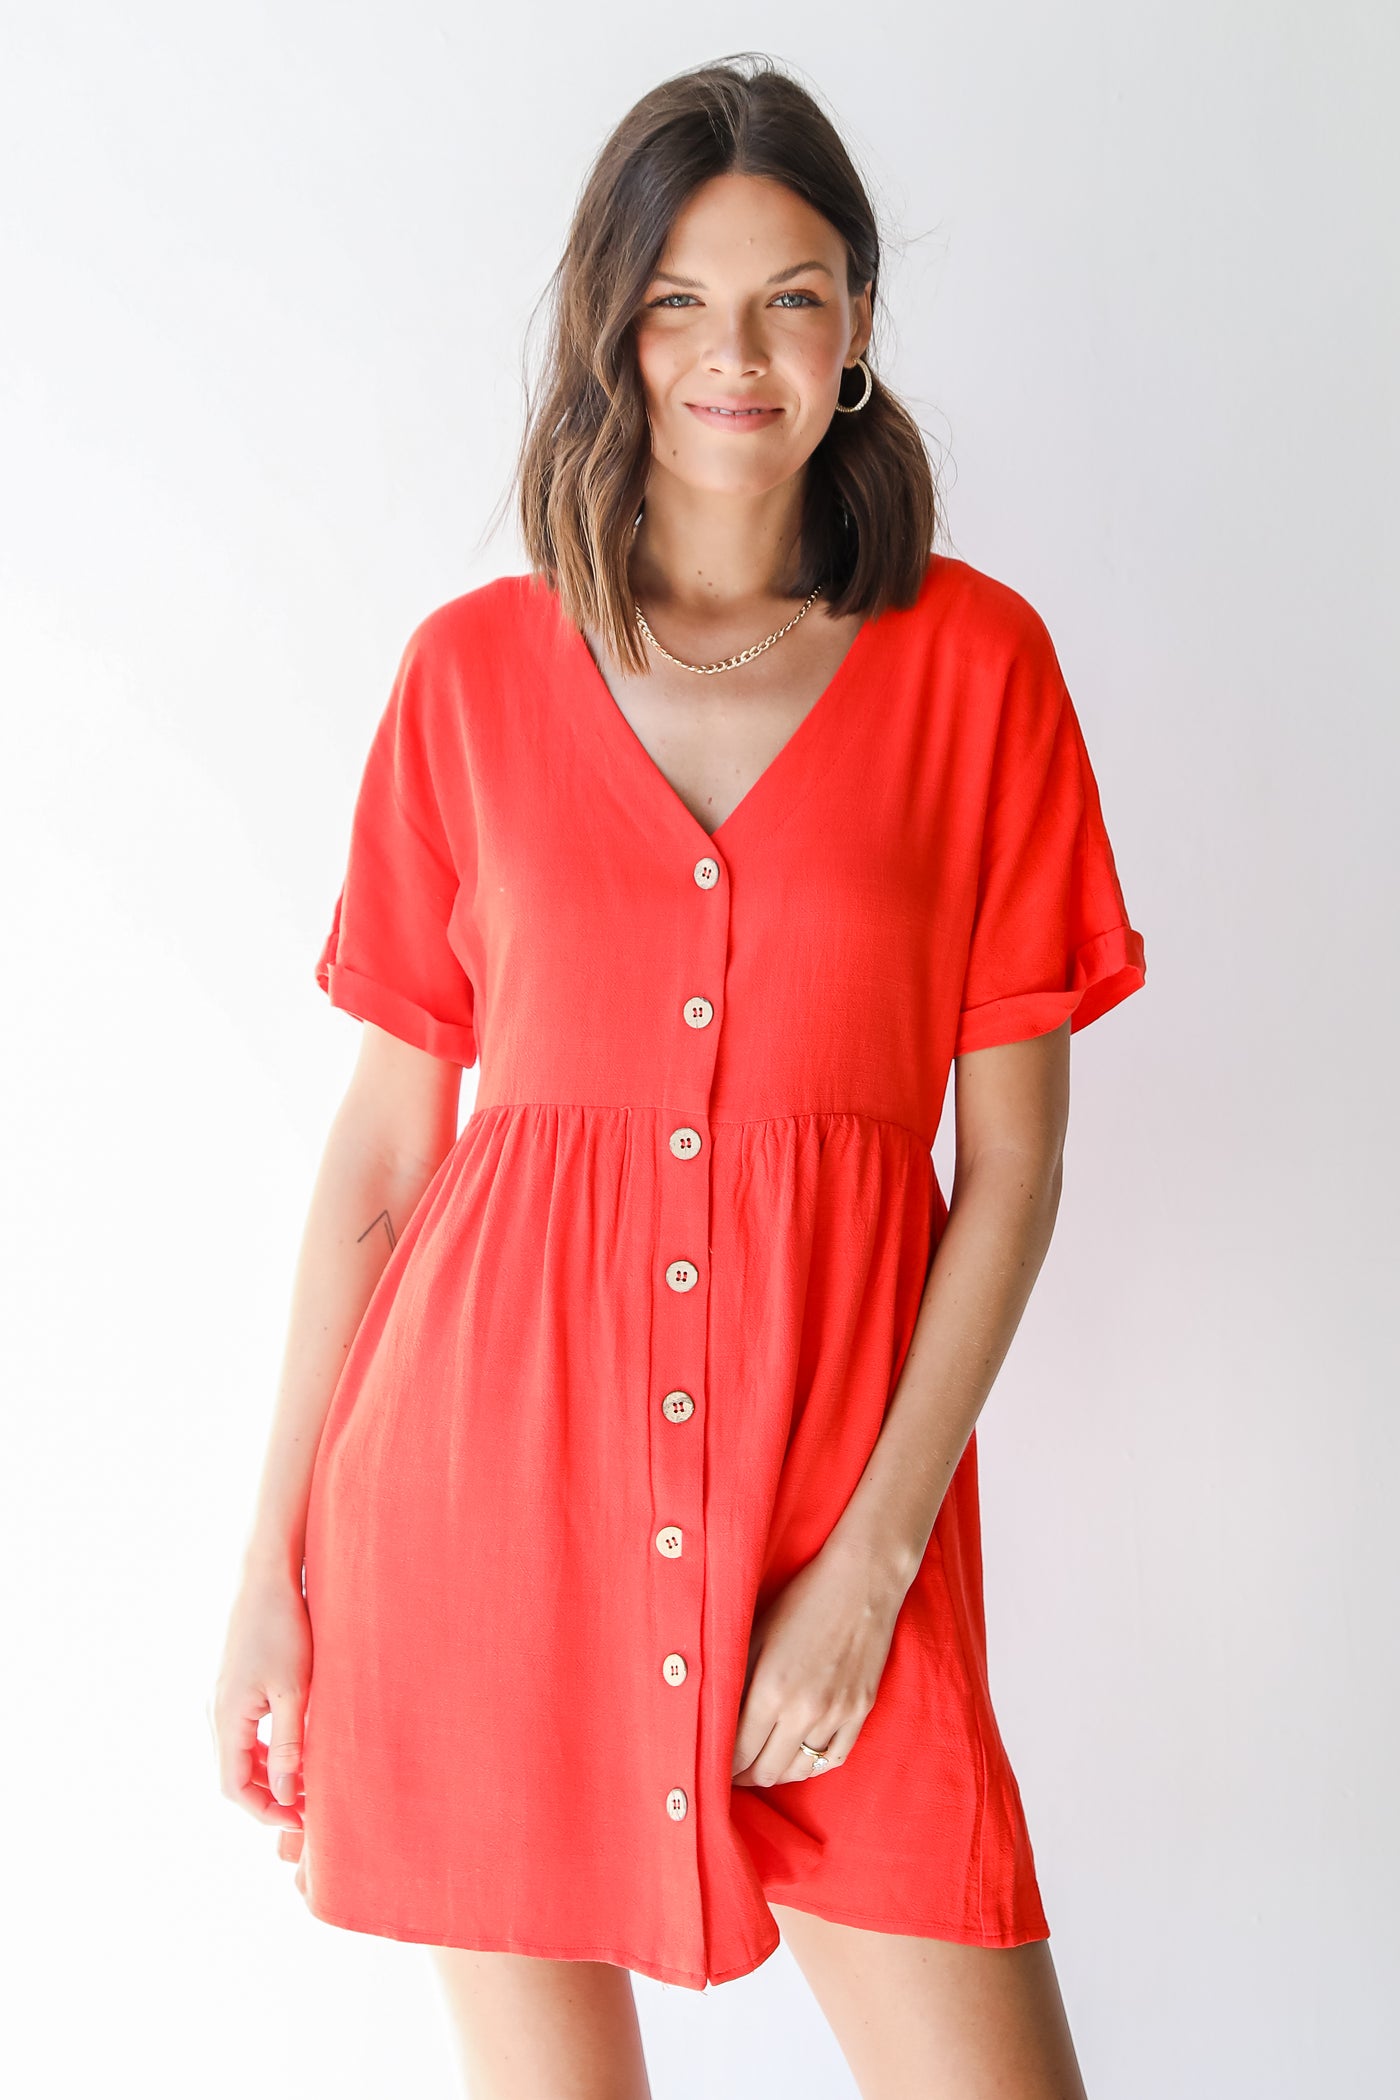 Linen Babydoll Dress in red on model